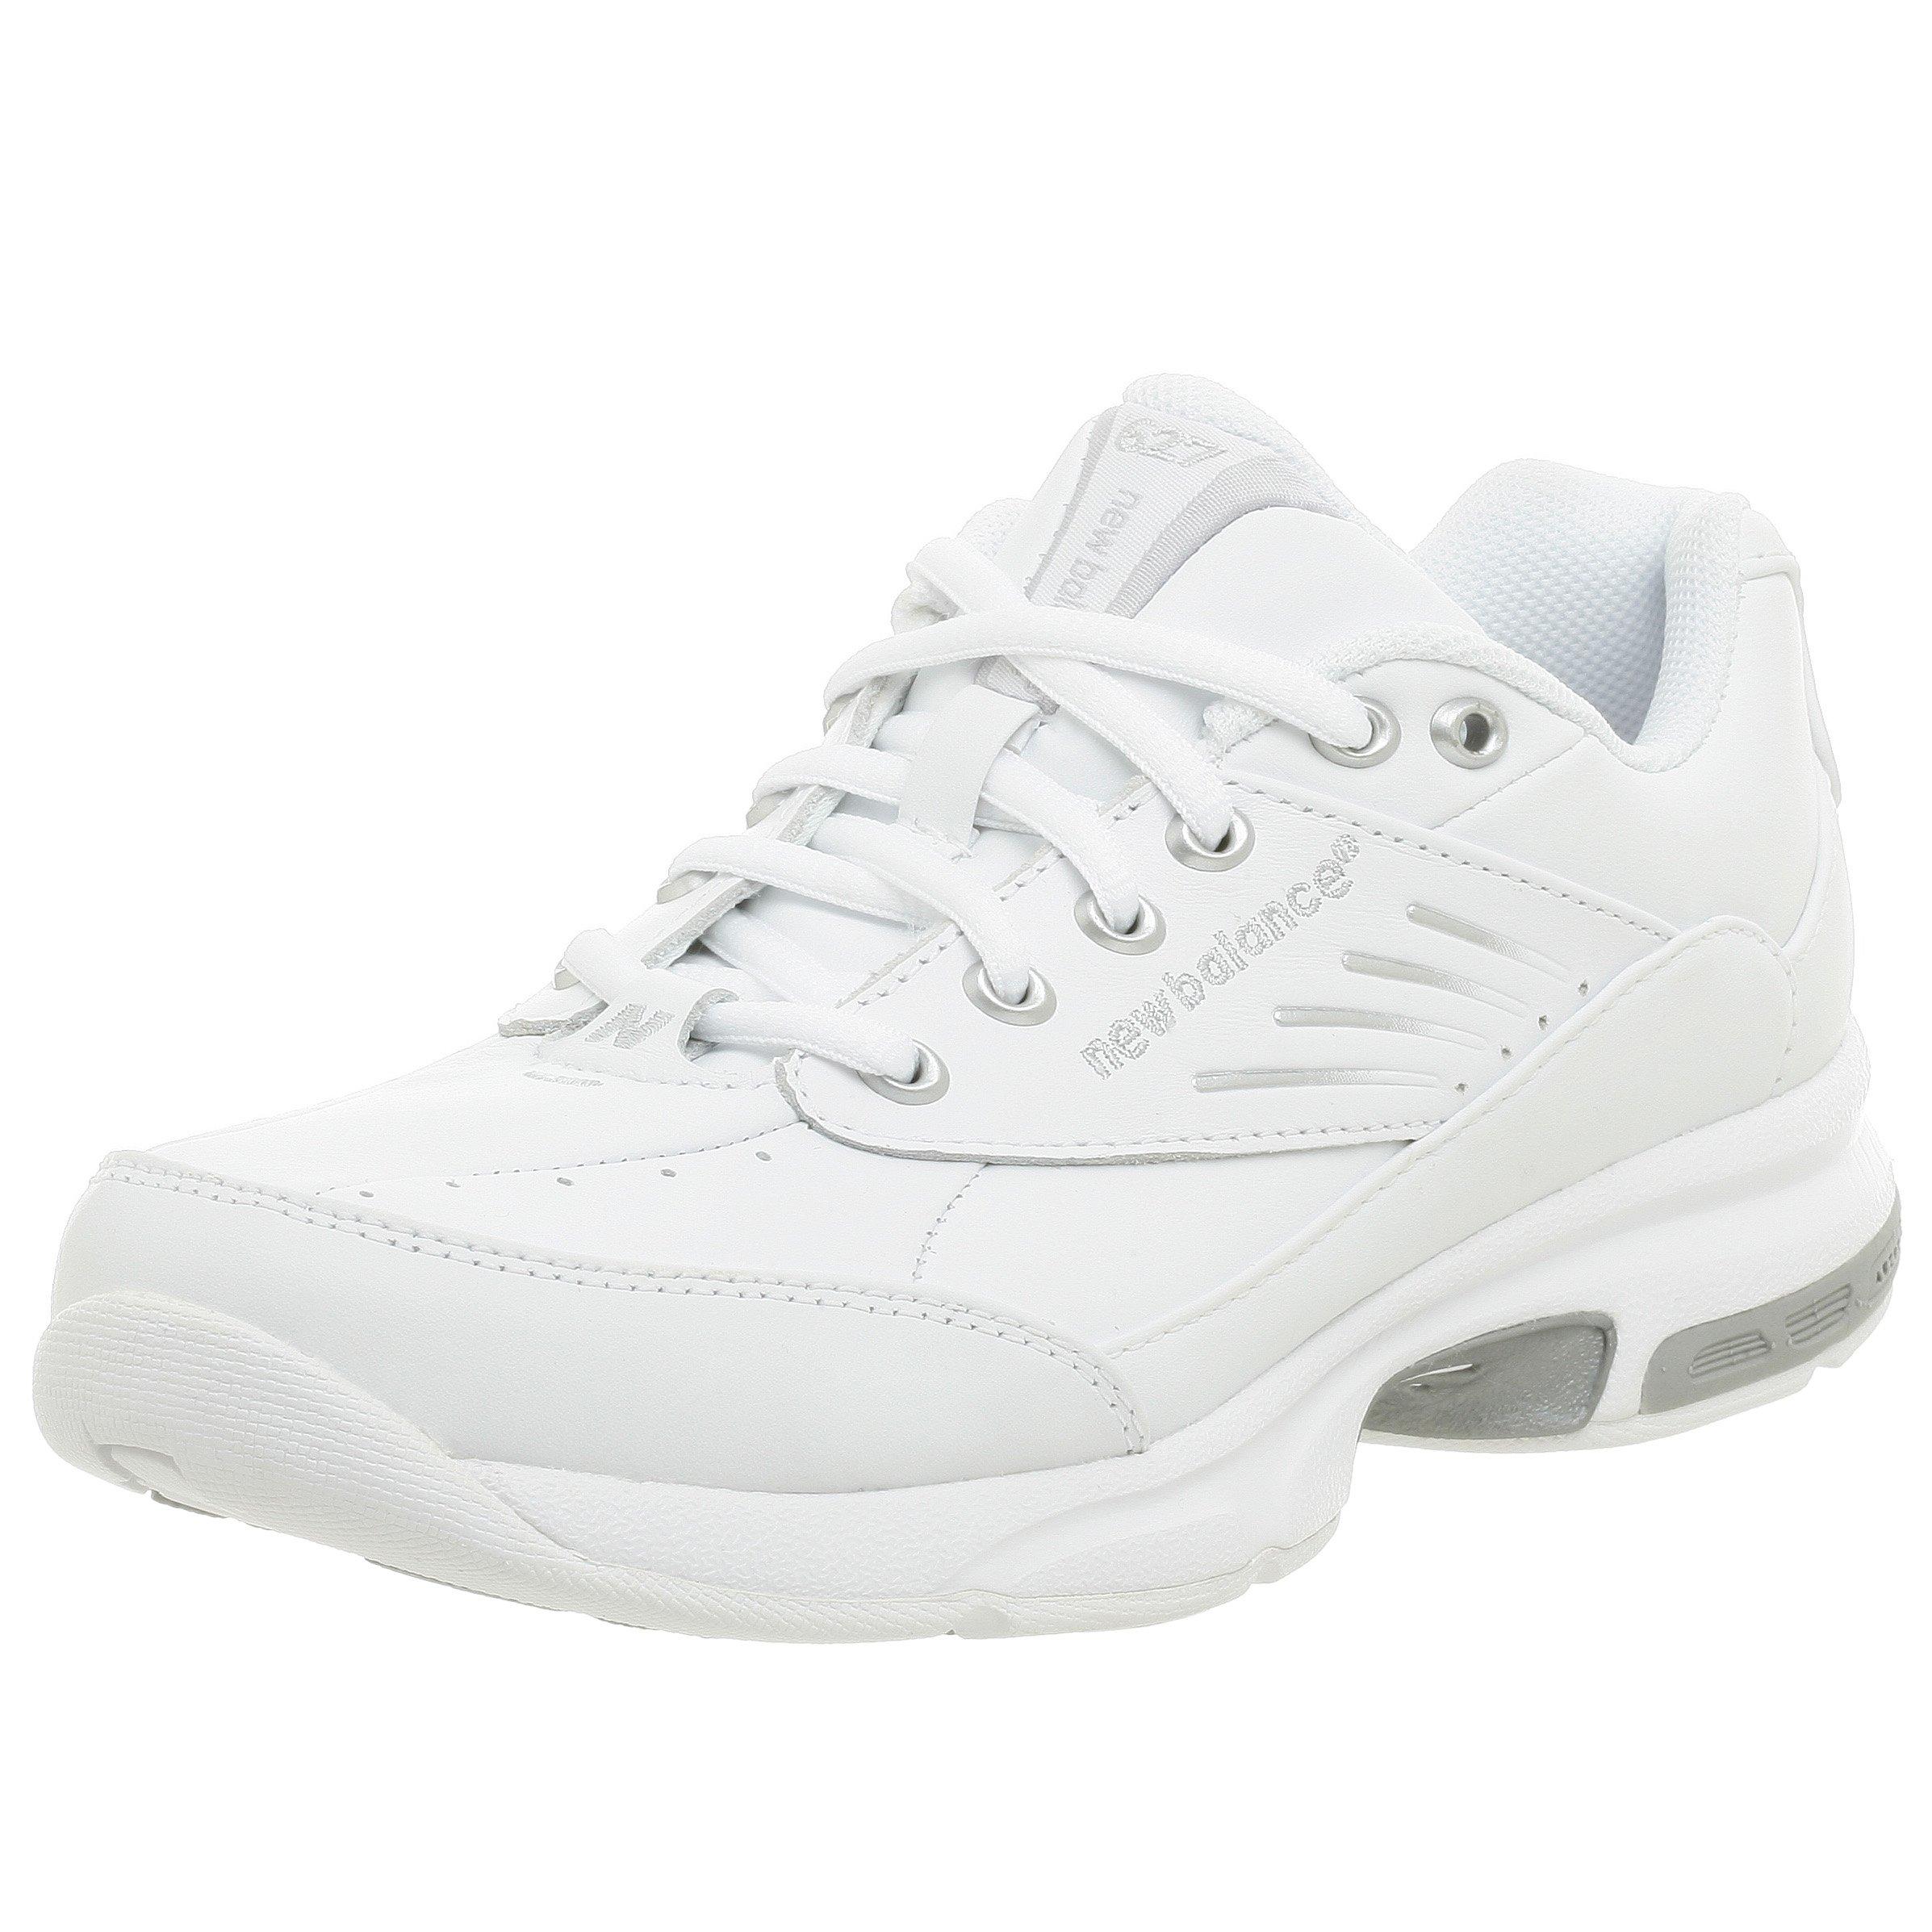 New Balance 627 V1 Walking Shoe in White | Lyst